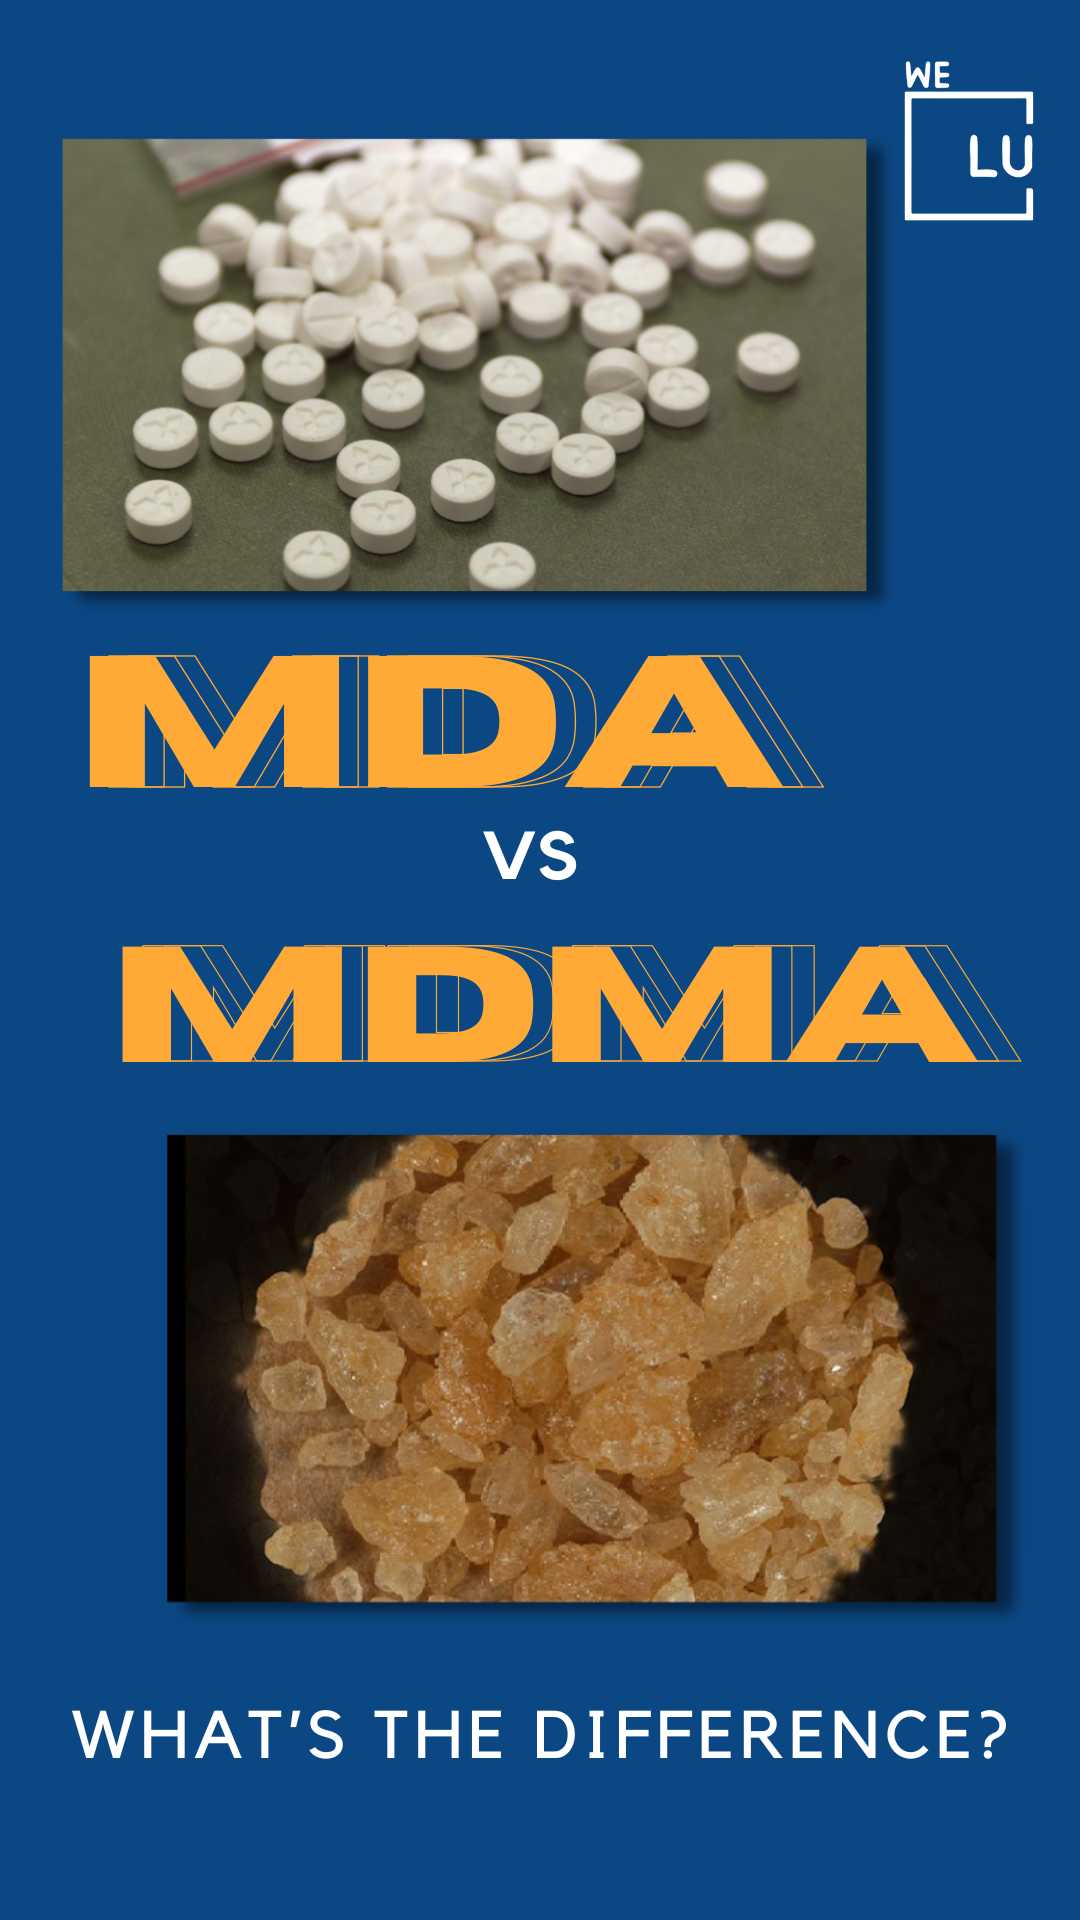 Microdosing MDMA